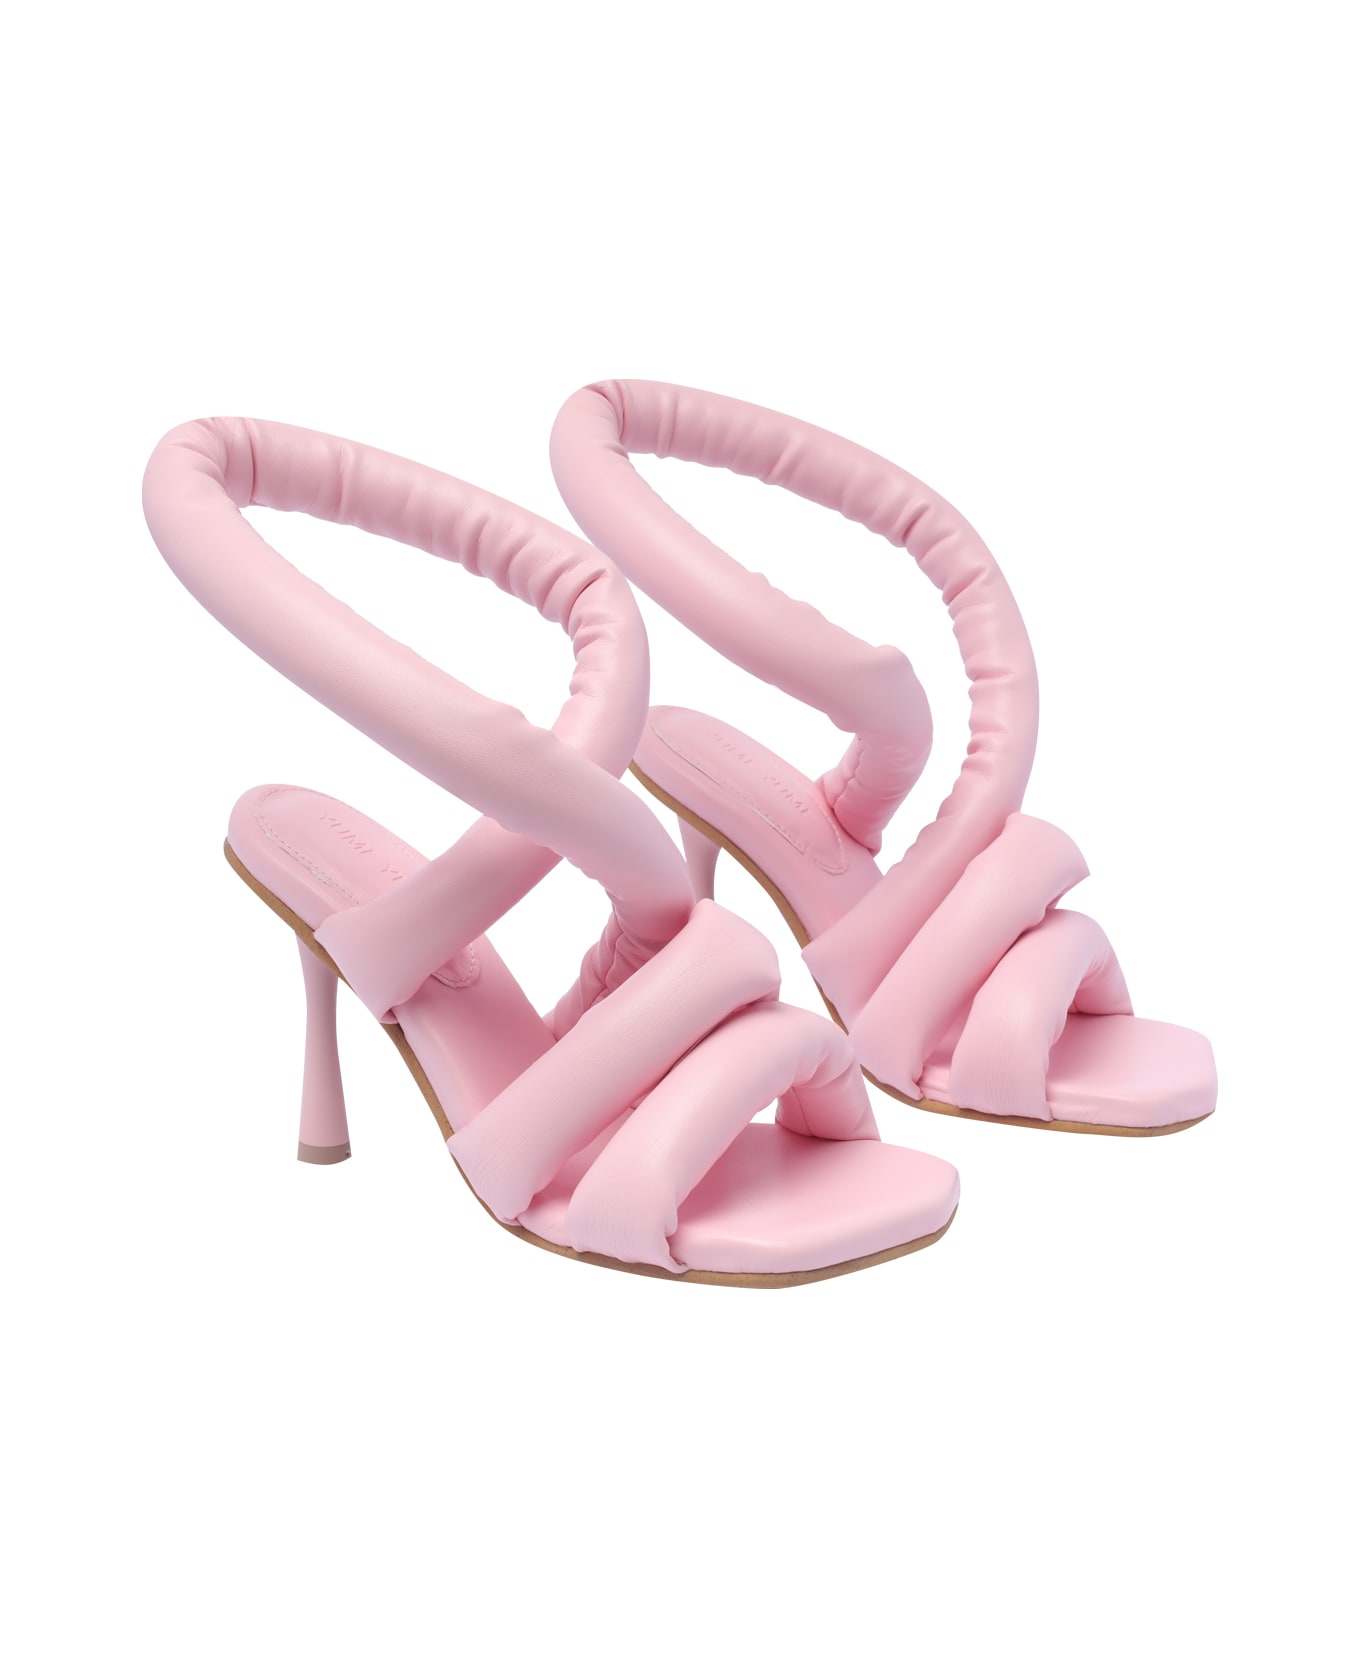 YUME YUME Circular Pump Sandals - Pink